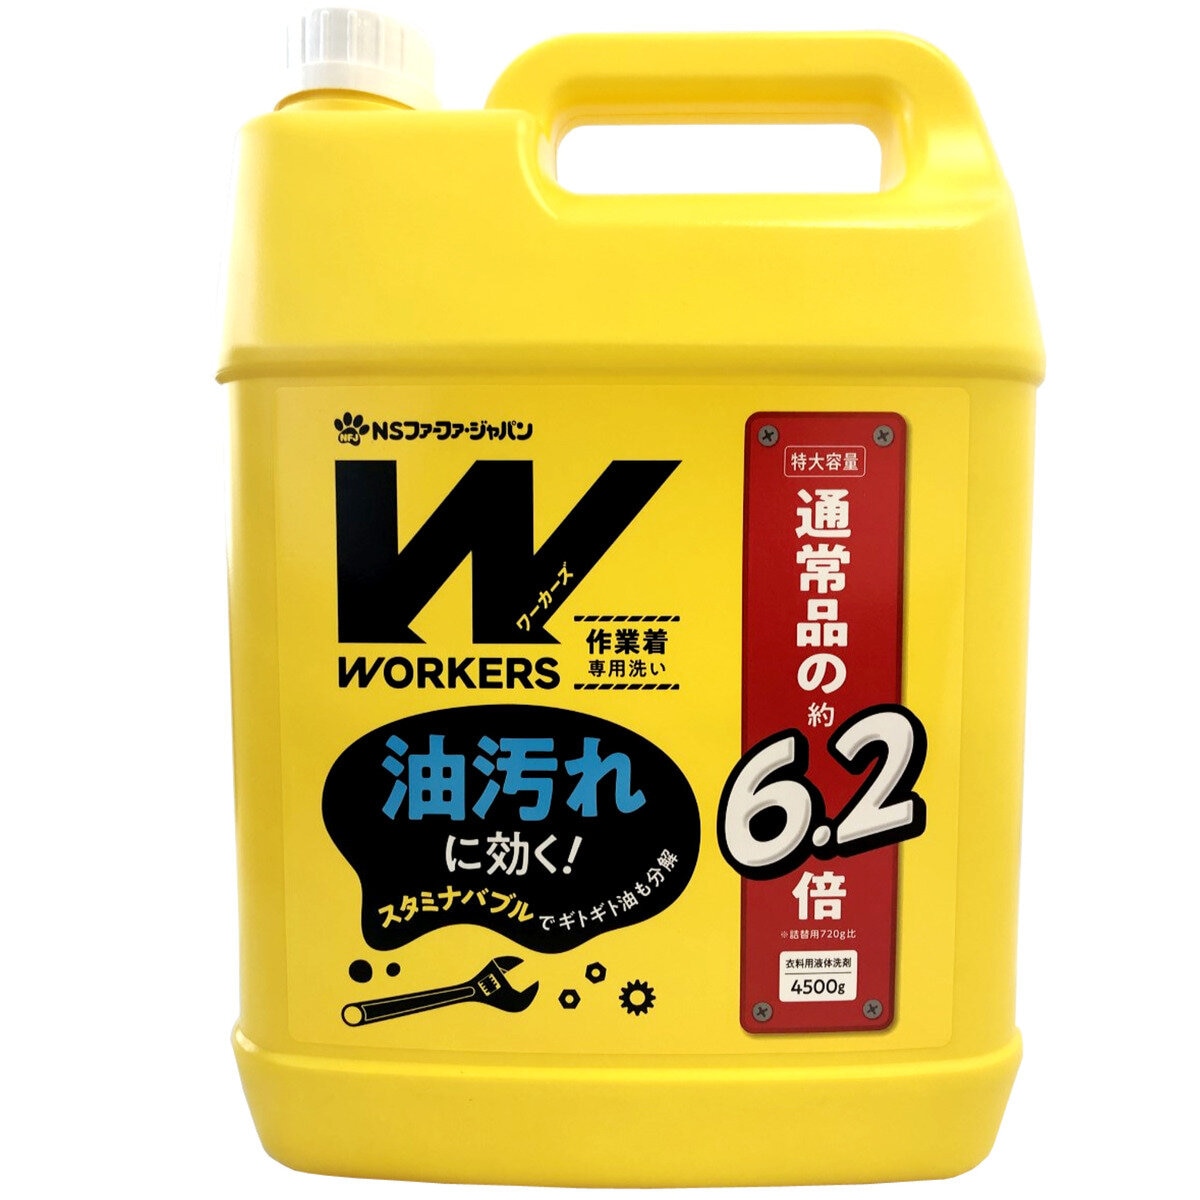 WORKERS 作業着液体洗剤 4500g詰替 x 4本 | Costco Japan